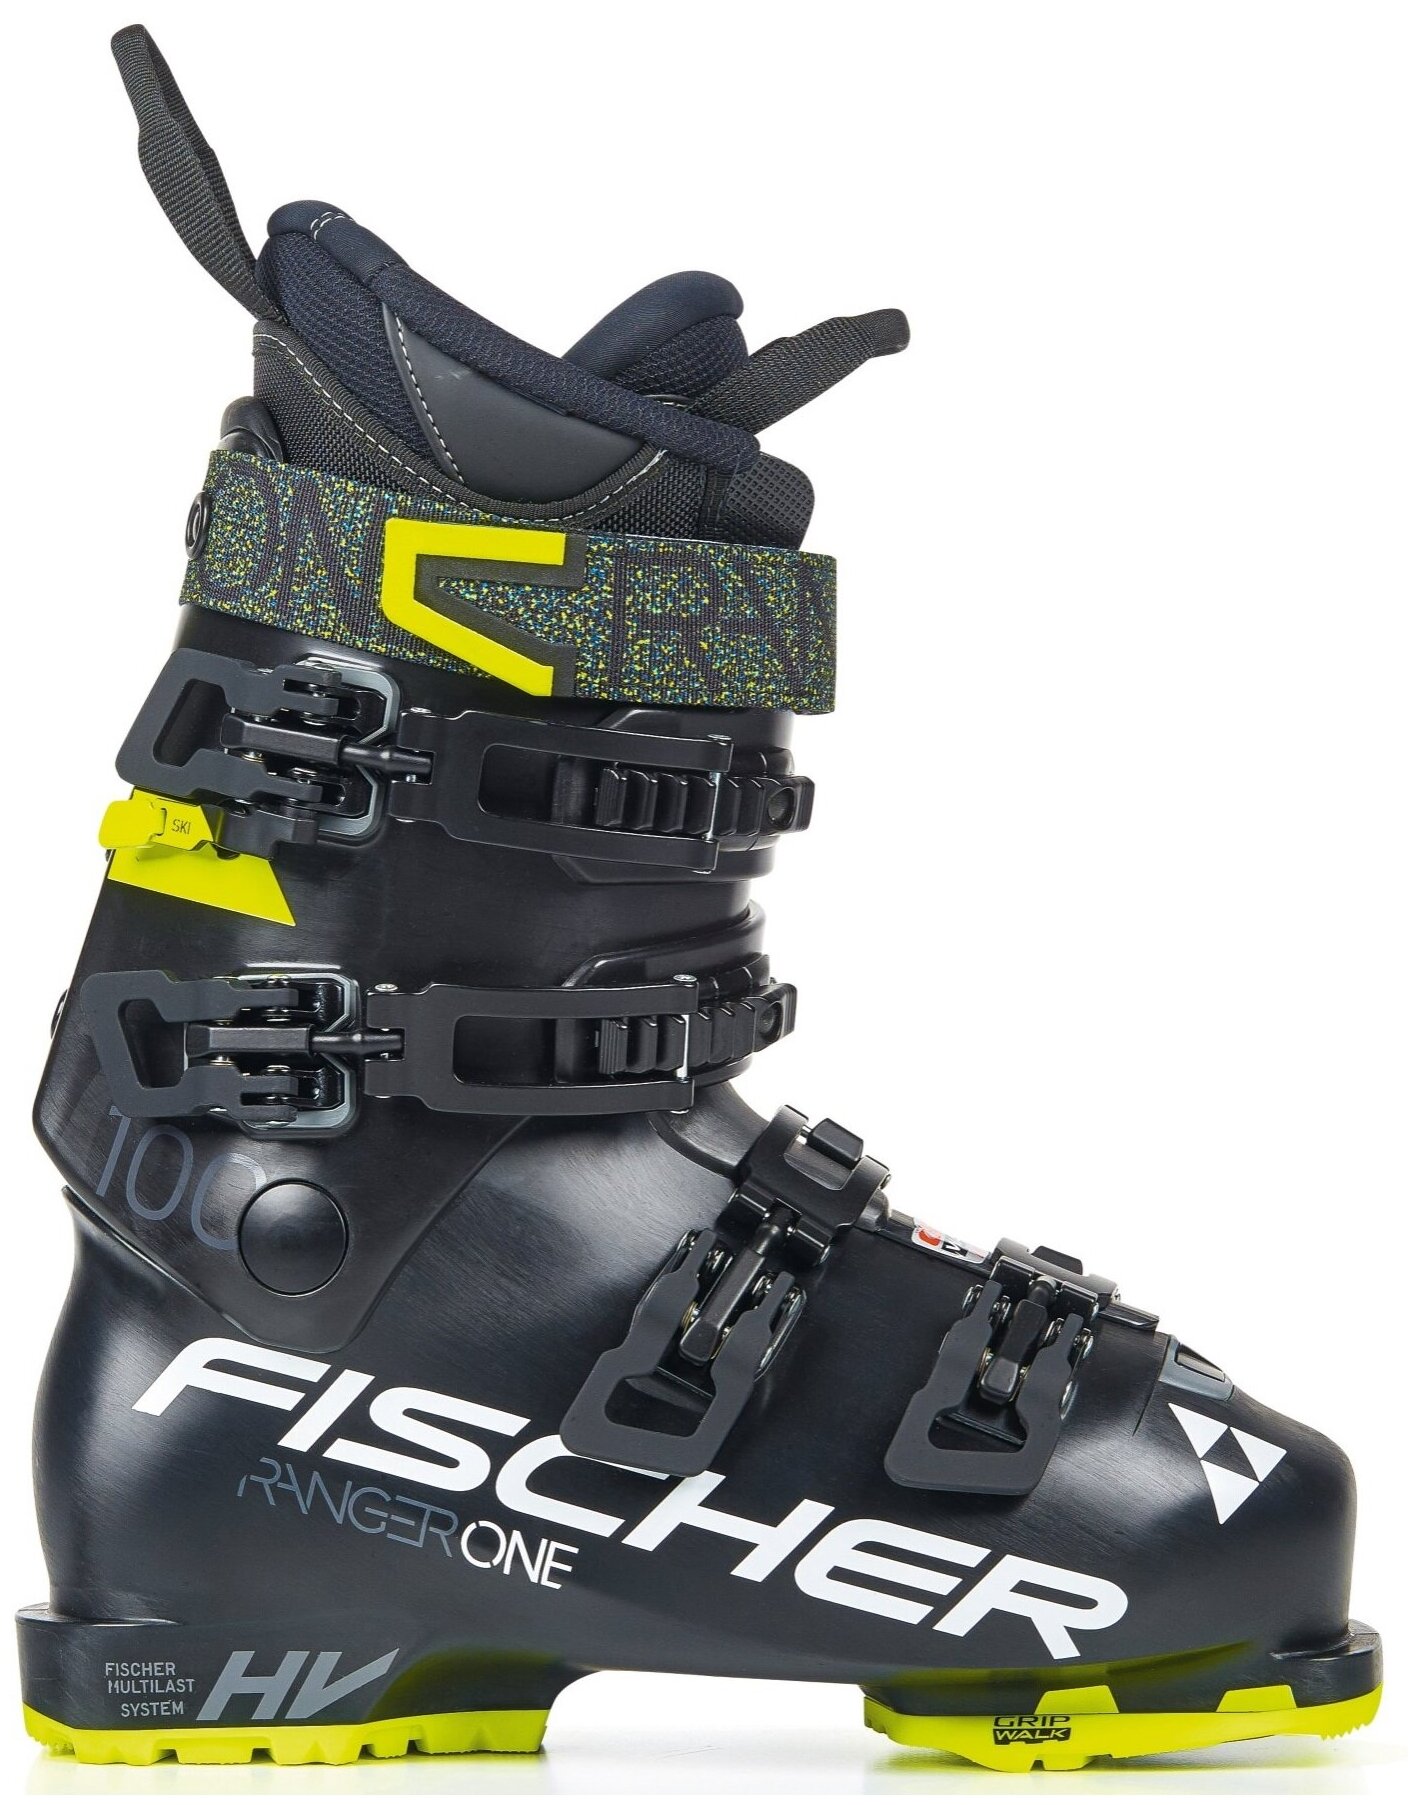 Горнолыжные ботинки Fischer Ranger One 100 PBV Walk Black/Yellow (19/20) (26.5)